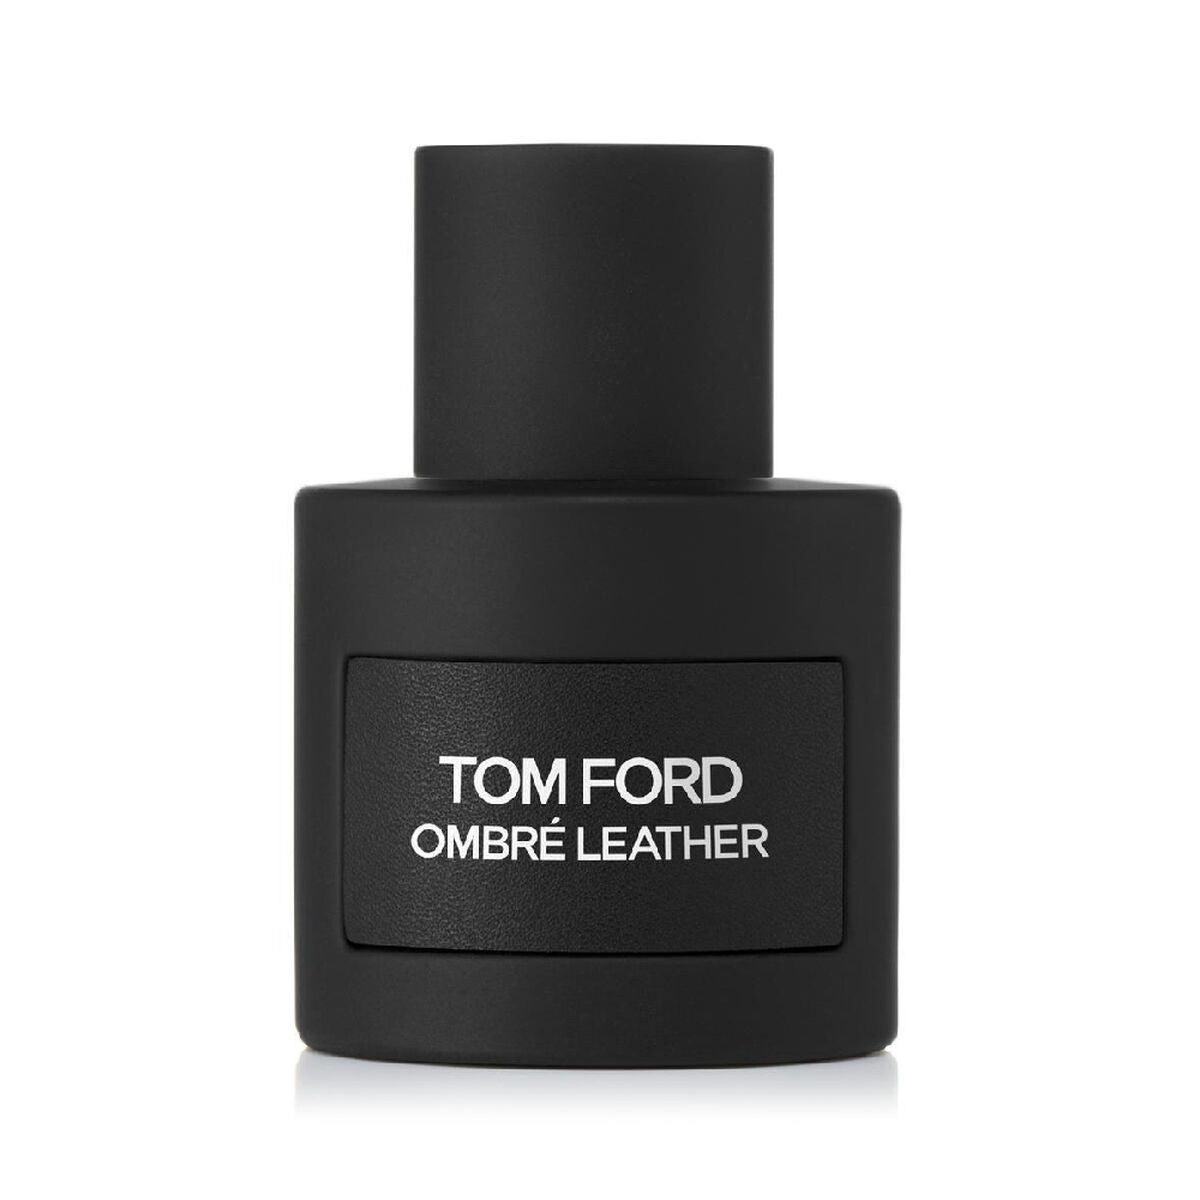 Kaufe Unisex-Parfüm Tom Ford 50 ml bei AWK Flagship um € 149.00